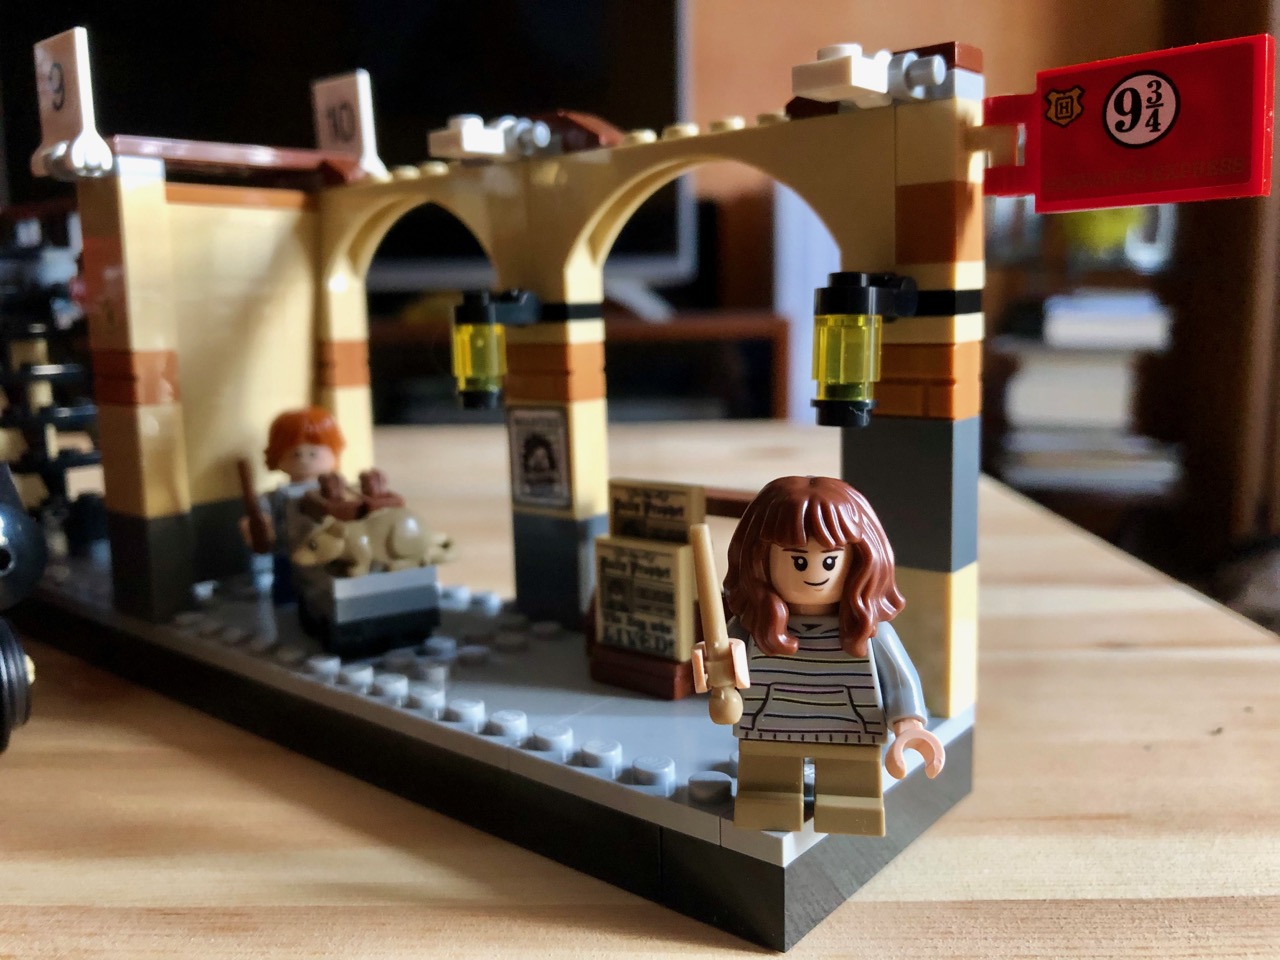 Lego Harry Potter Hogwarts Express 75955